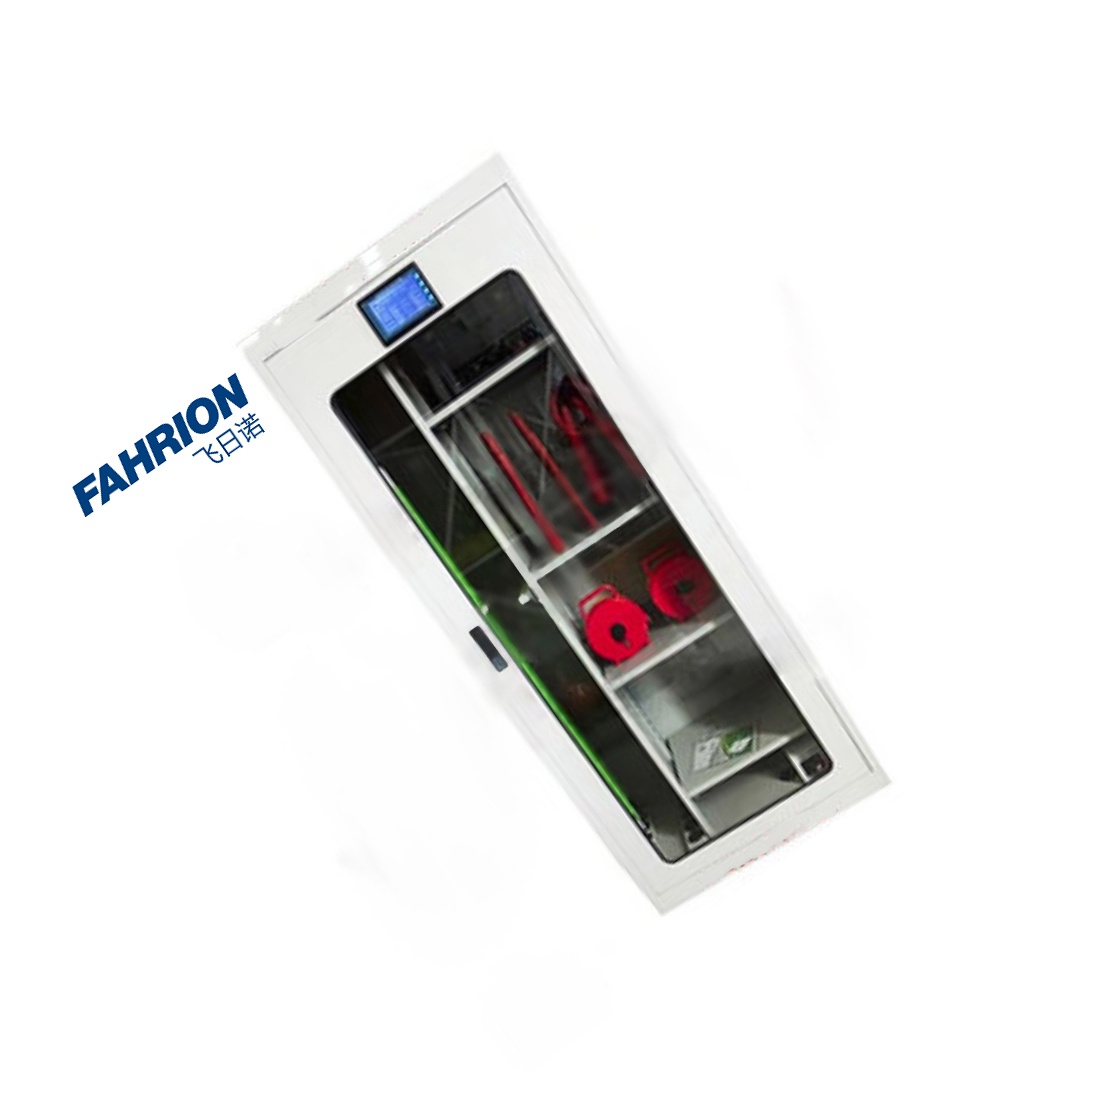 FAHRION 电力安全工具柜 GD99-900-3353